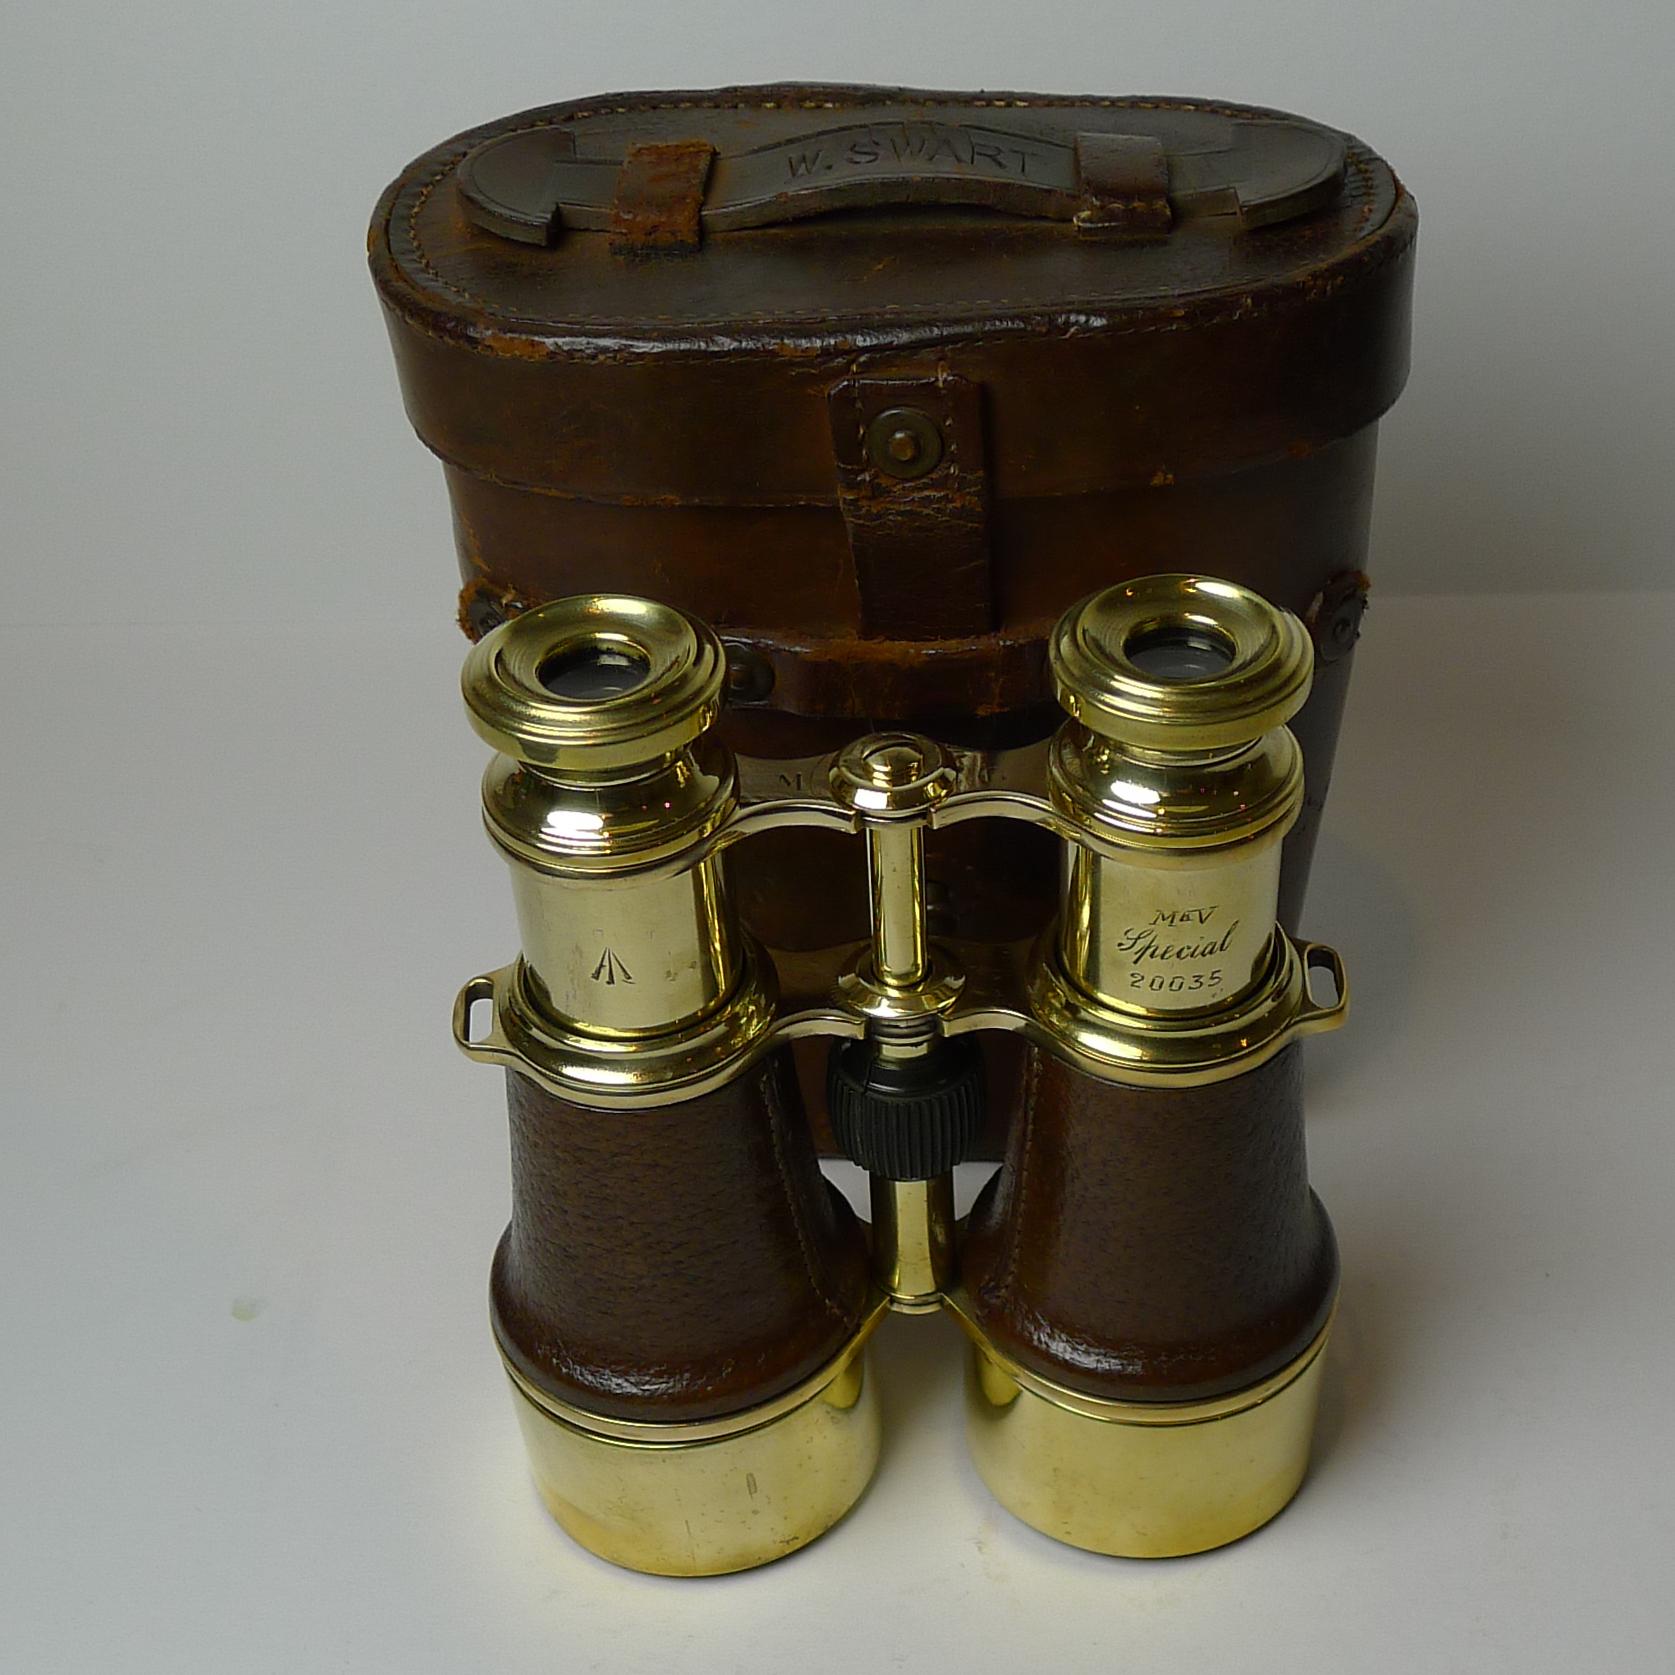 French Made WW1 Binoculars For British Military Issue c.1917 1